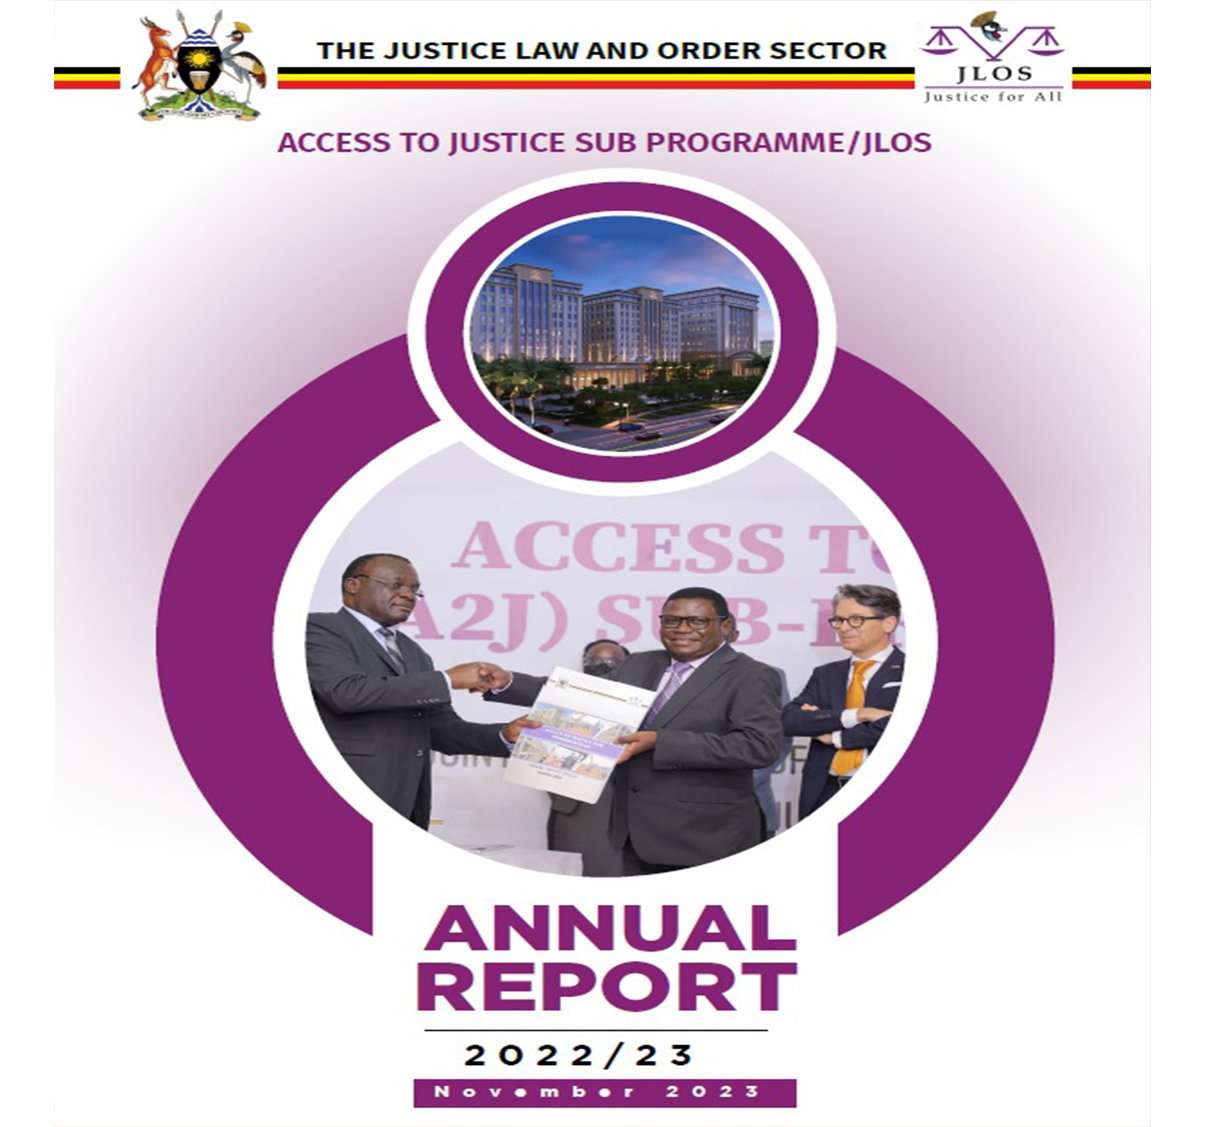 Annual Report 2022/2023